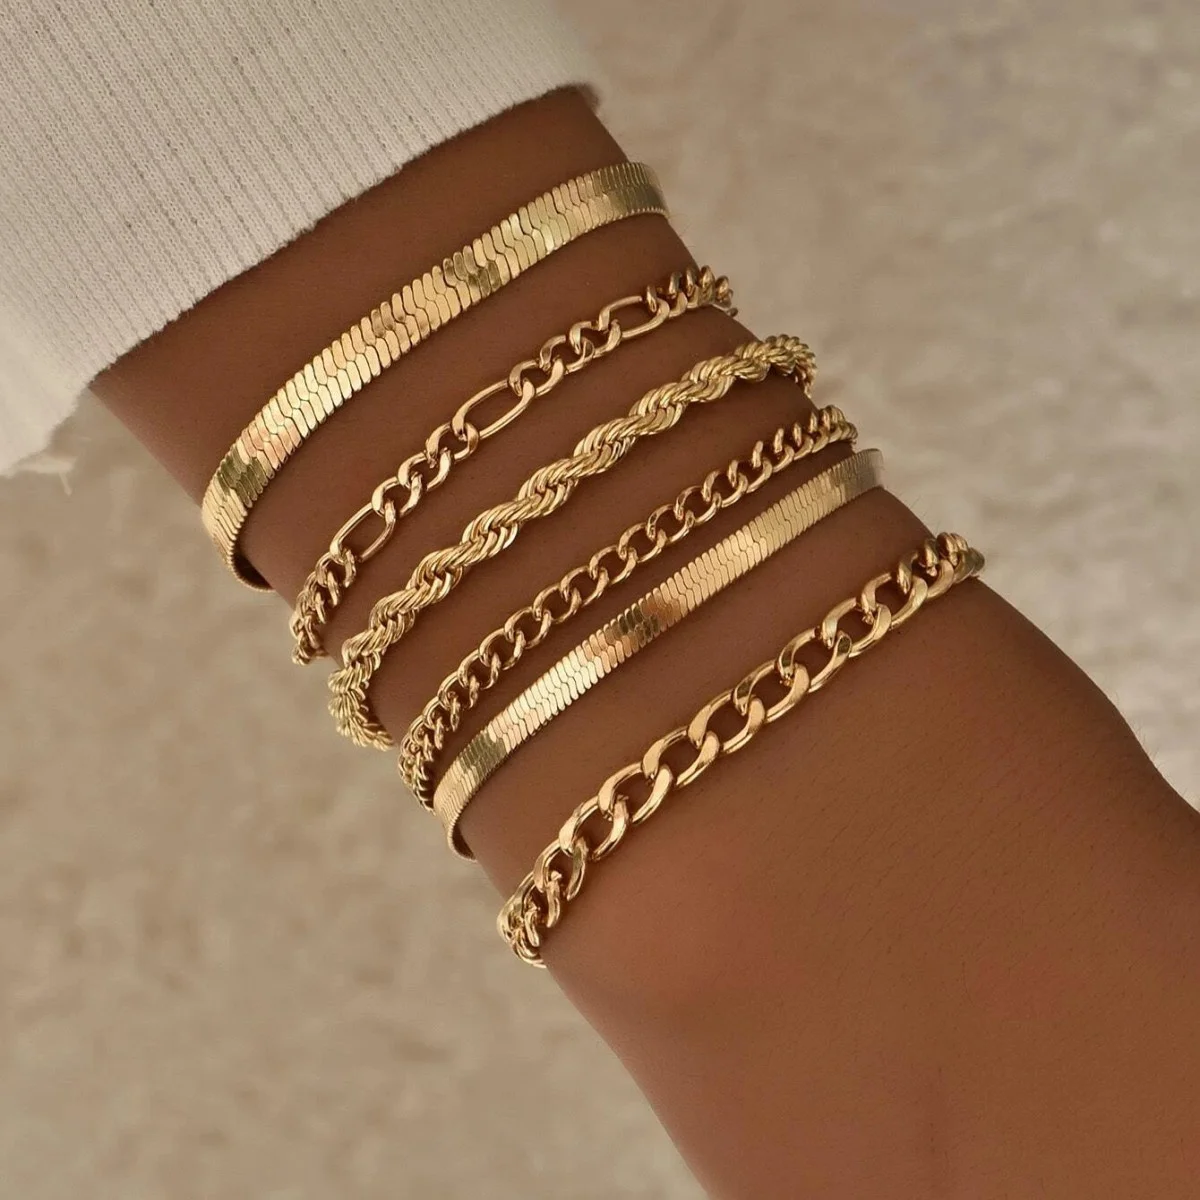 6Pcs/Set Fashion Thick Chain Link Bracelets Set For Women Gold Color Silver Color Metal Snake Chain Twist Bracelet Punk Jewelry